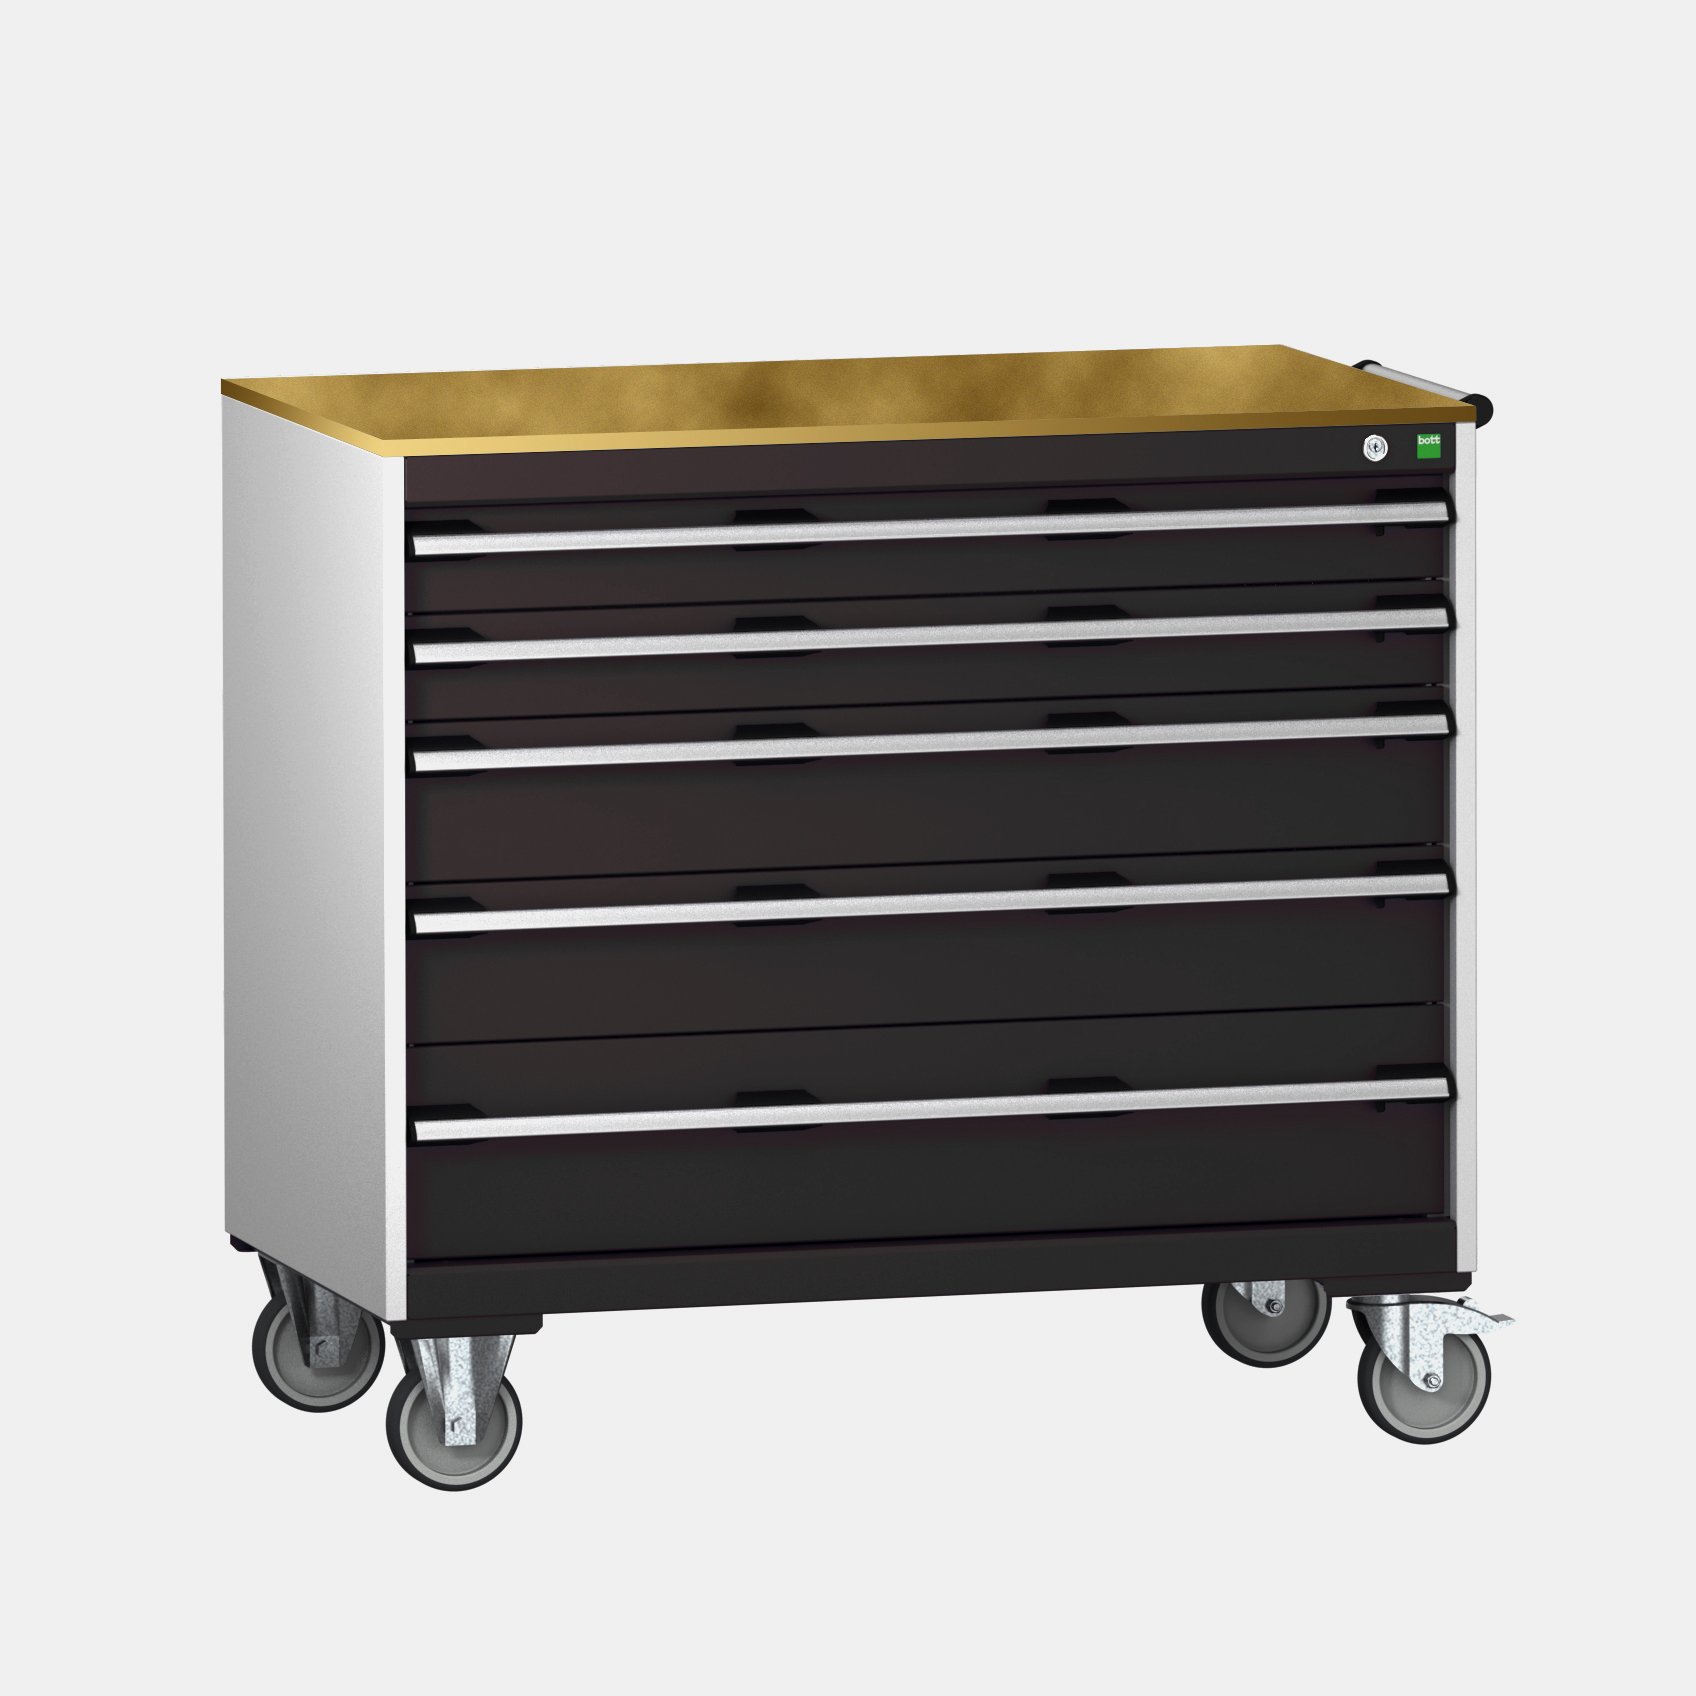 Bott Cubio Mobile Drawer Cabinet With 5 Drawers & Multiplex Worktop - 40402165.19V